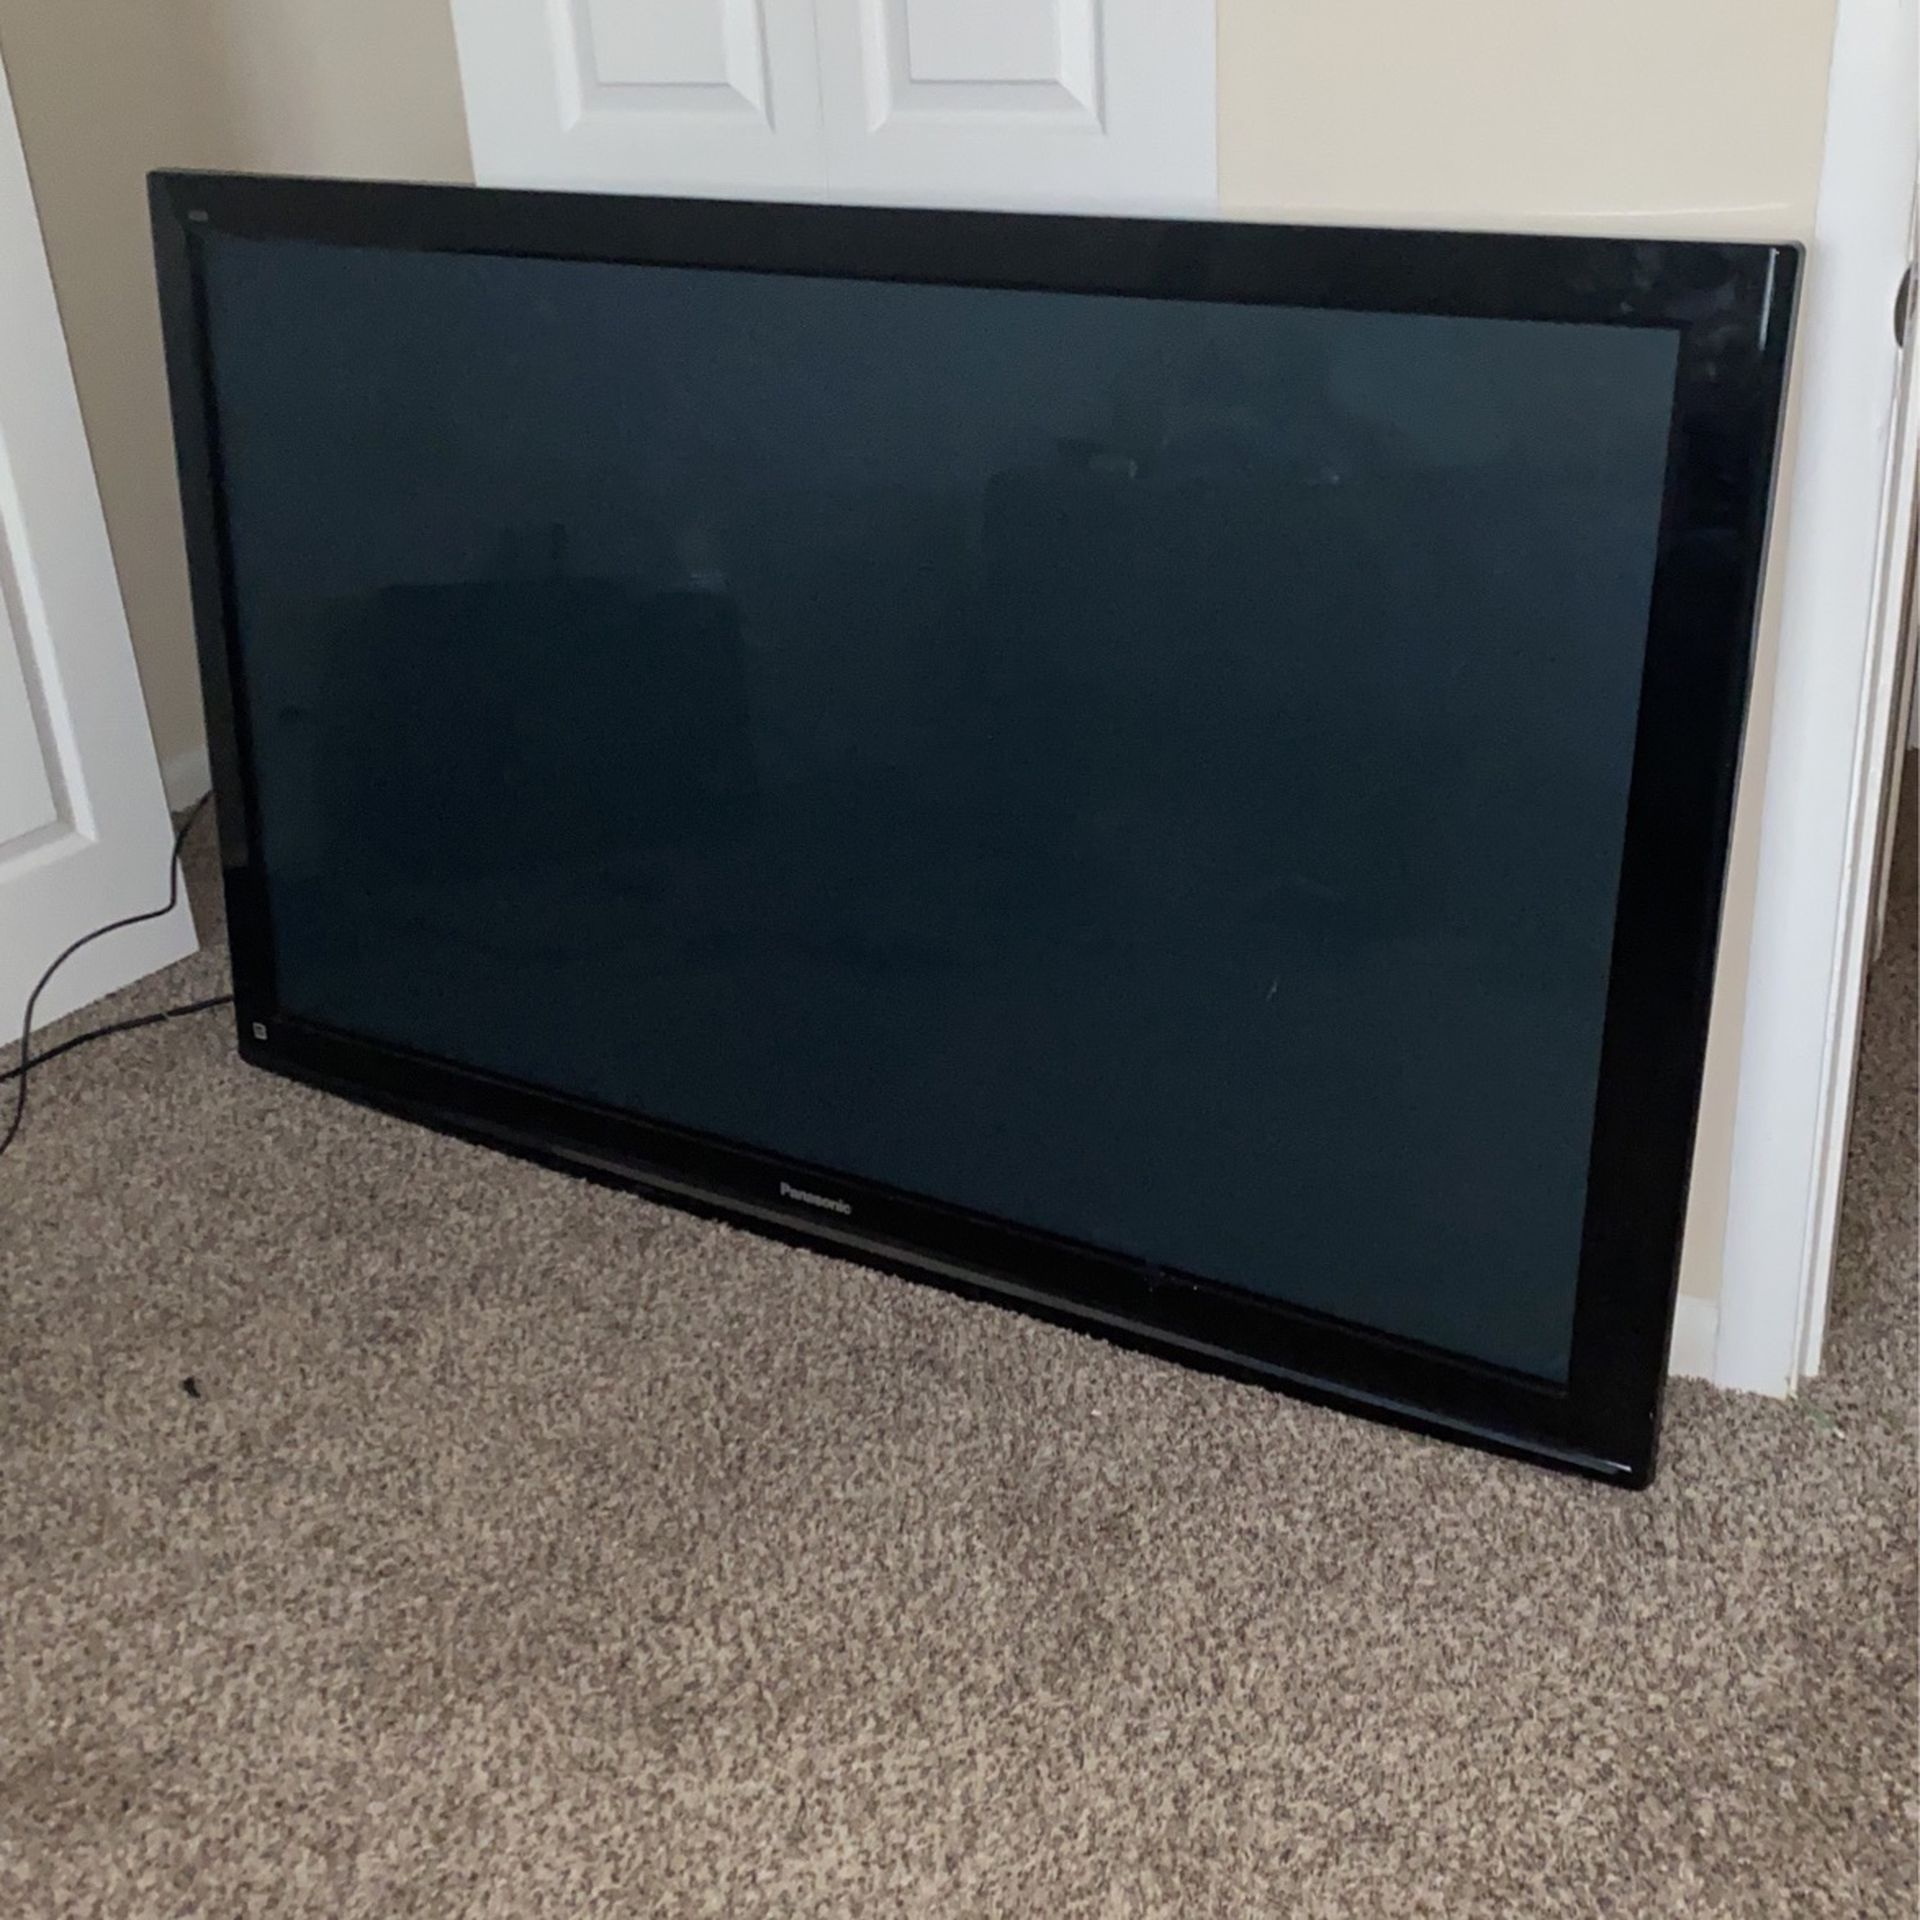 62” Flatscreen TV